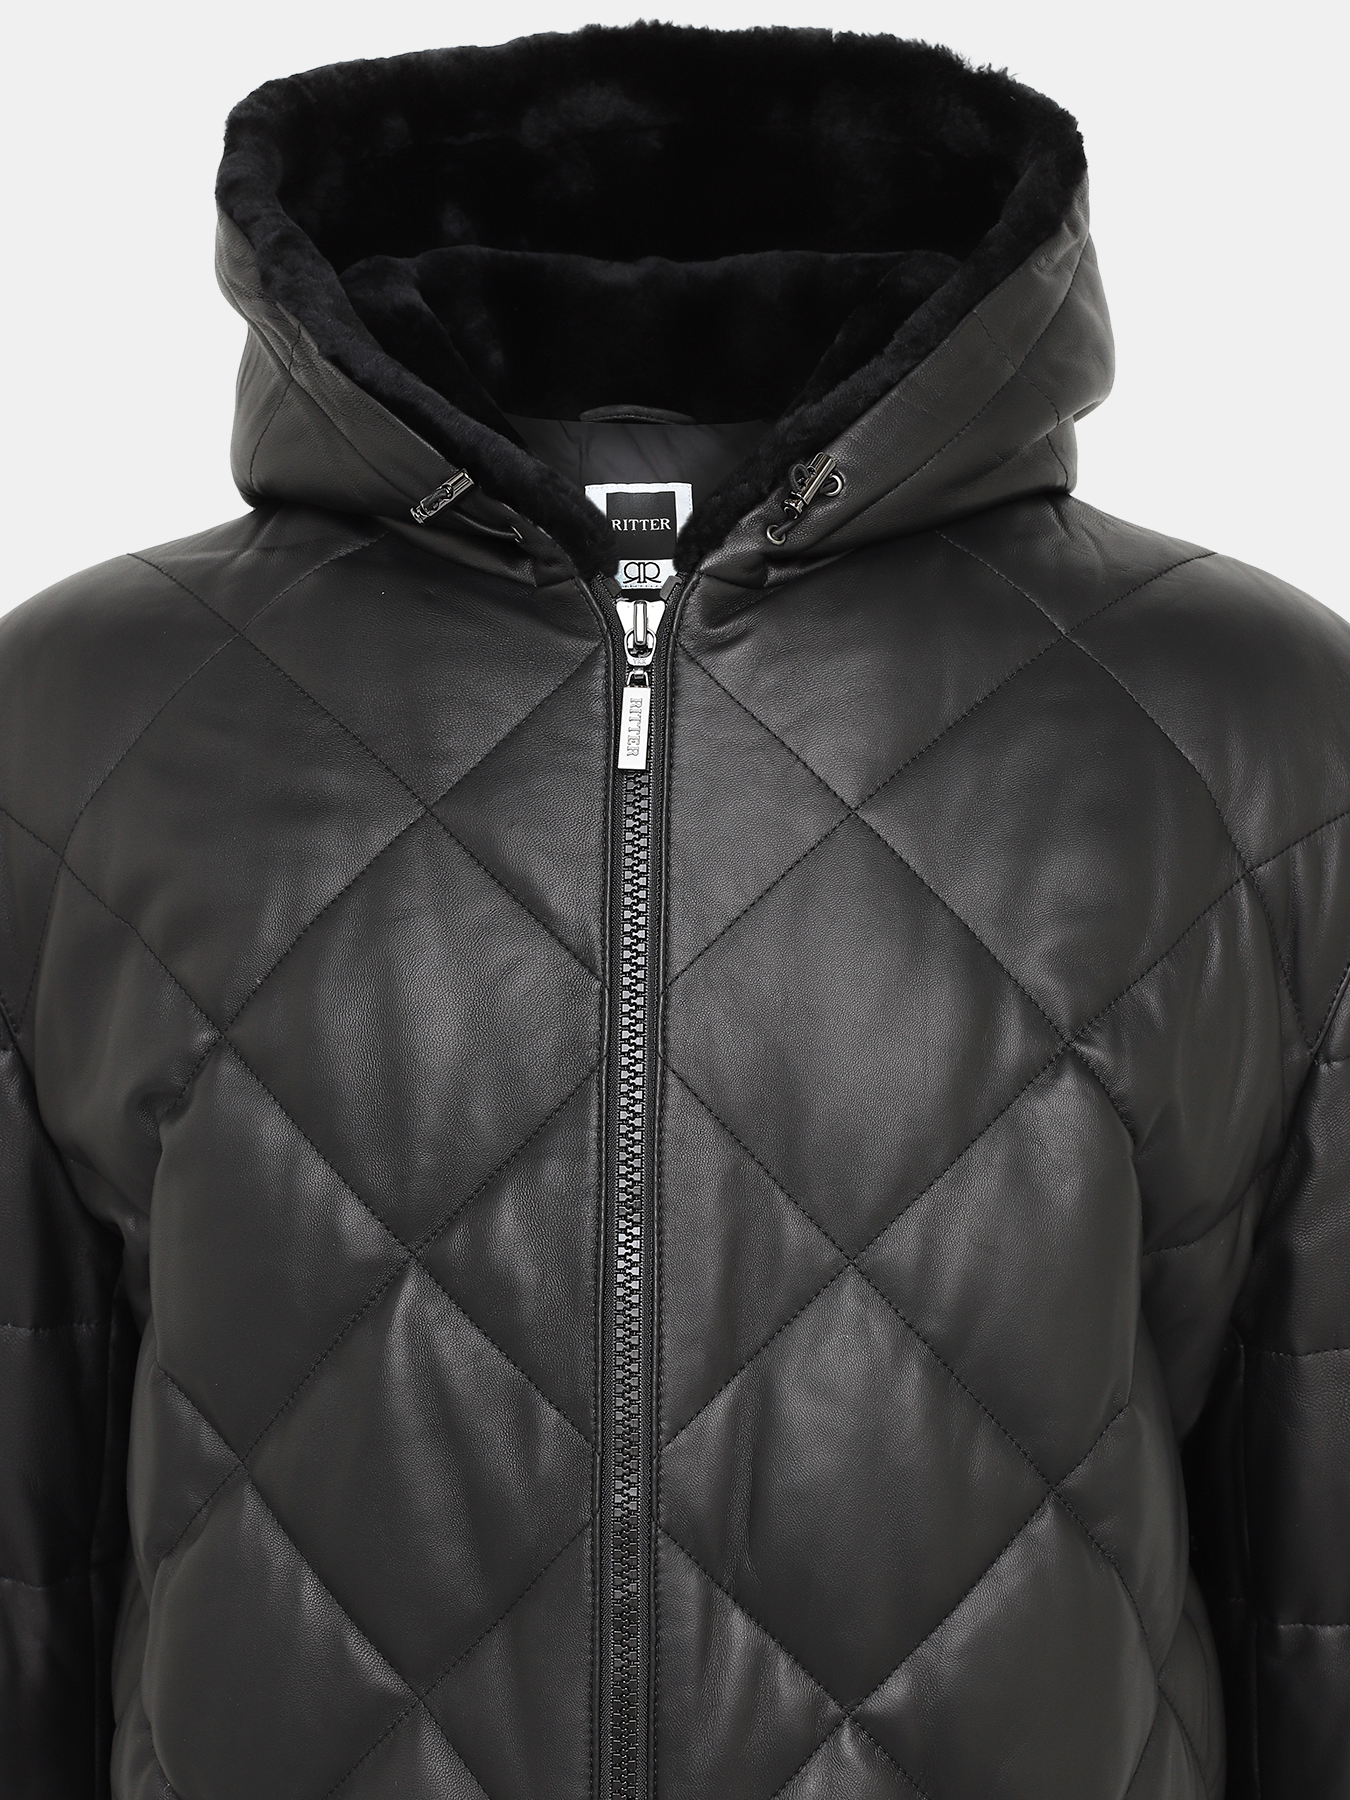 Кожаная куртка Ritter 390993-032, цвет черный, размер 62 - фото 4